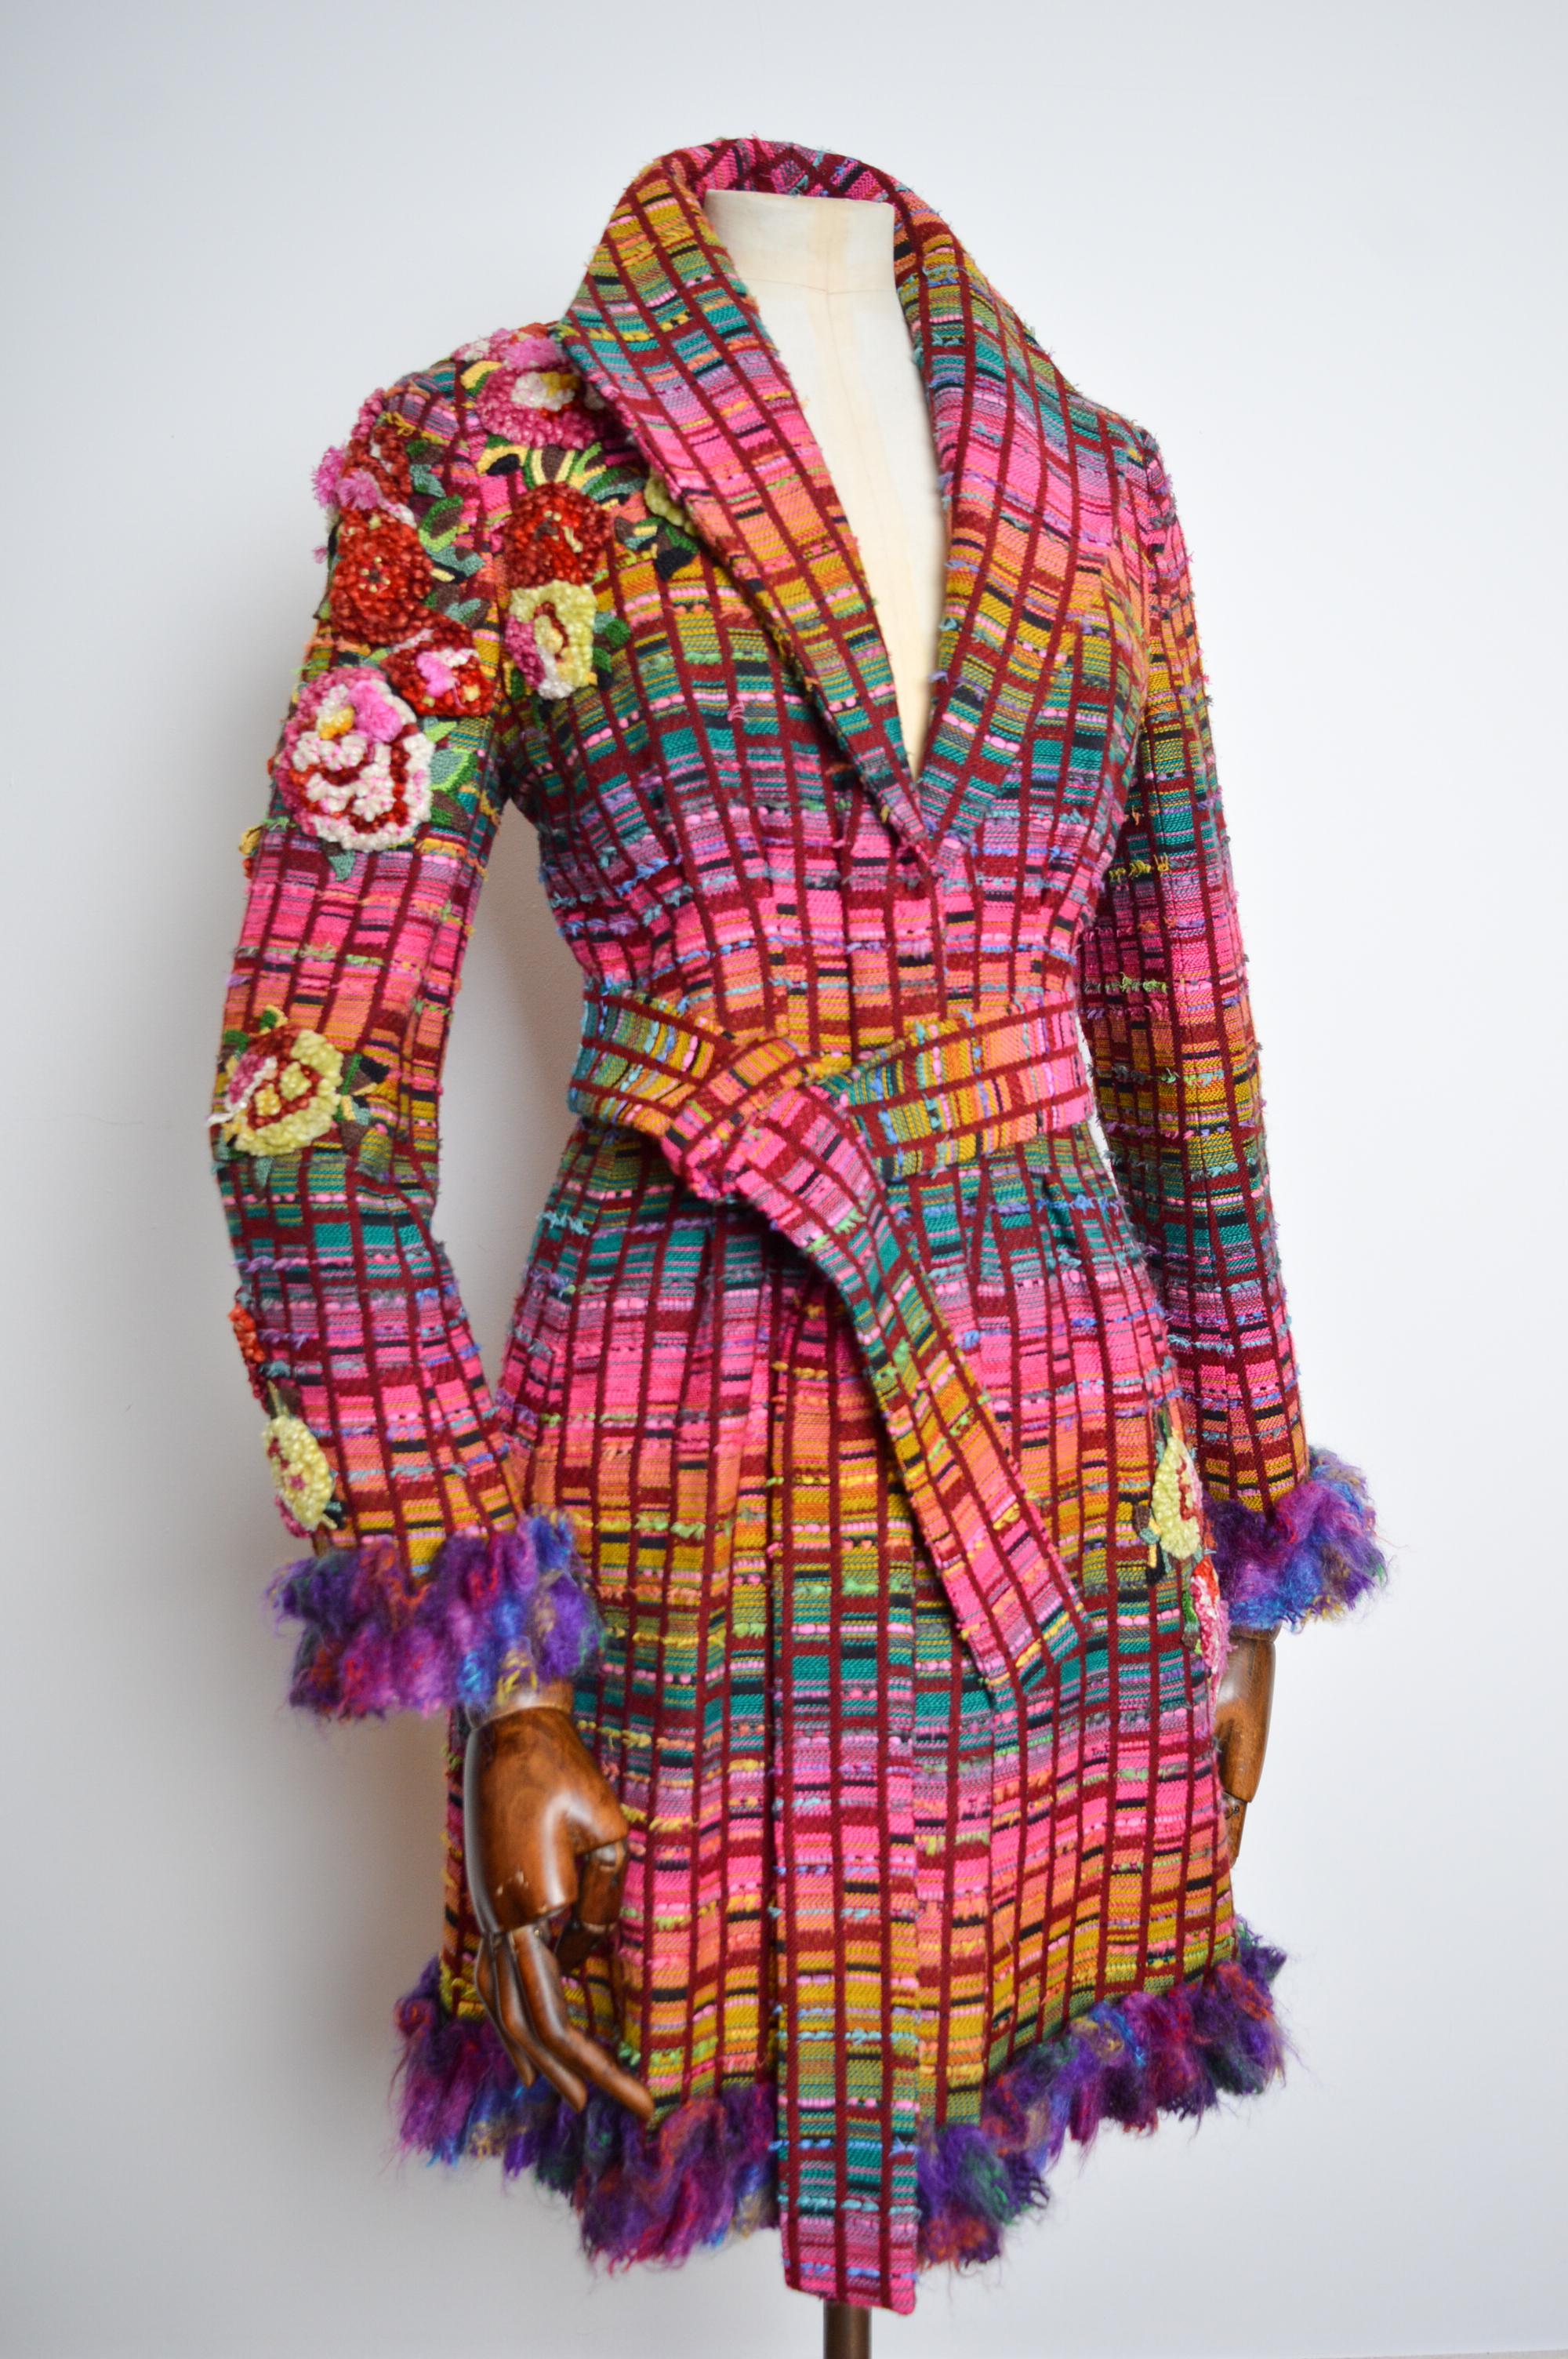 Superb Tweed Mathew Williamson Jewel Tone Embroidered Embellished Coat 5